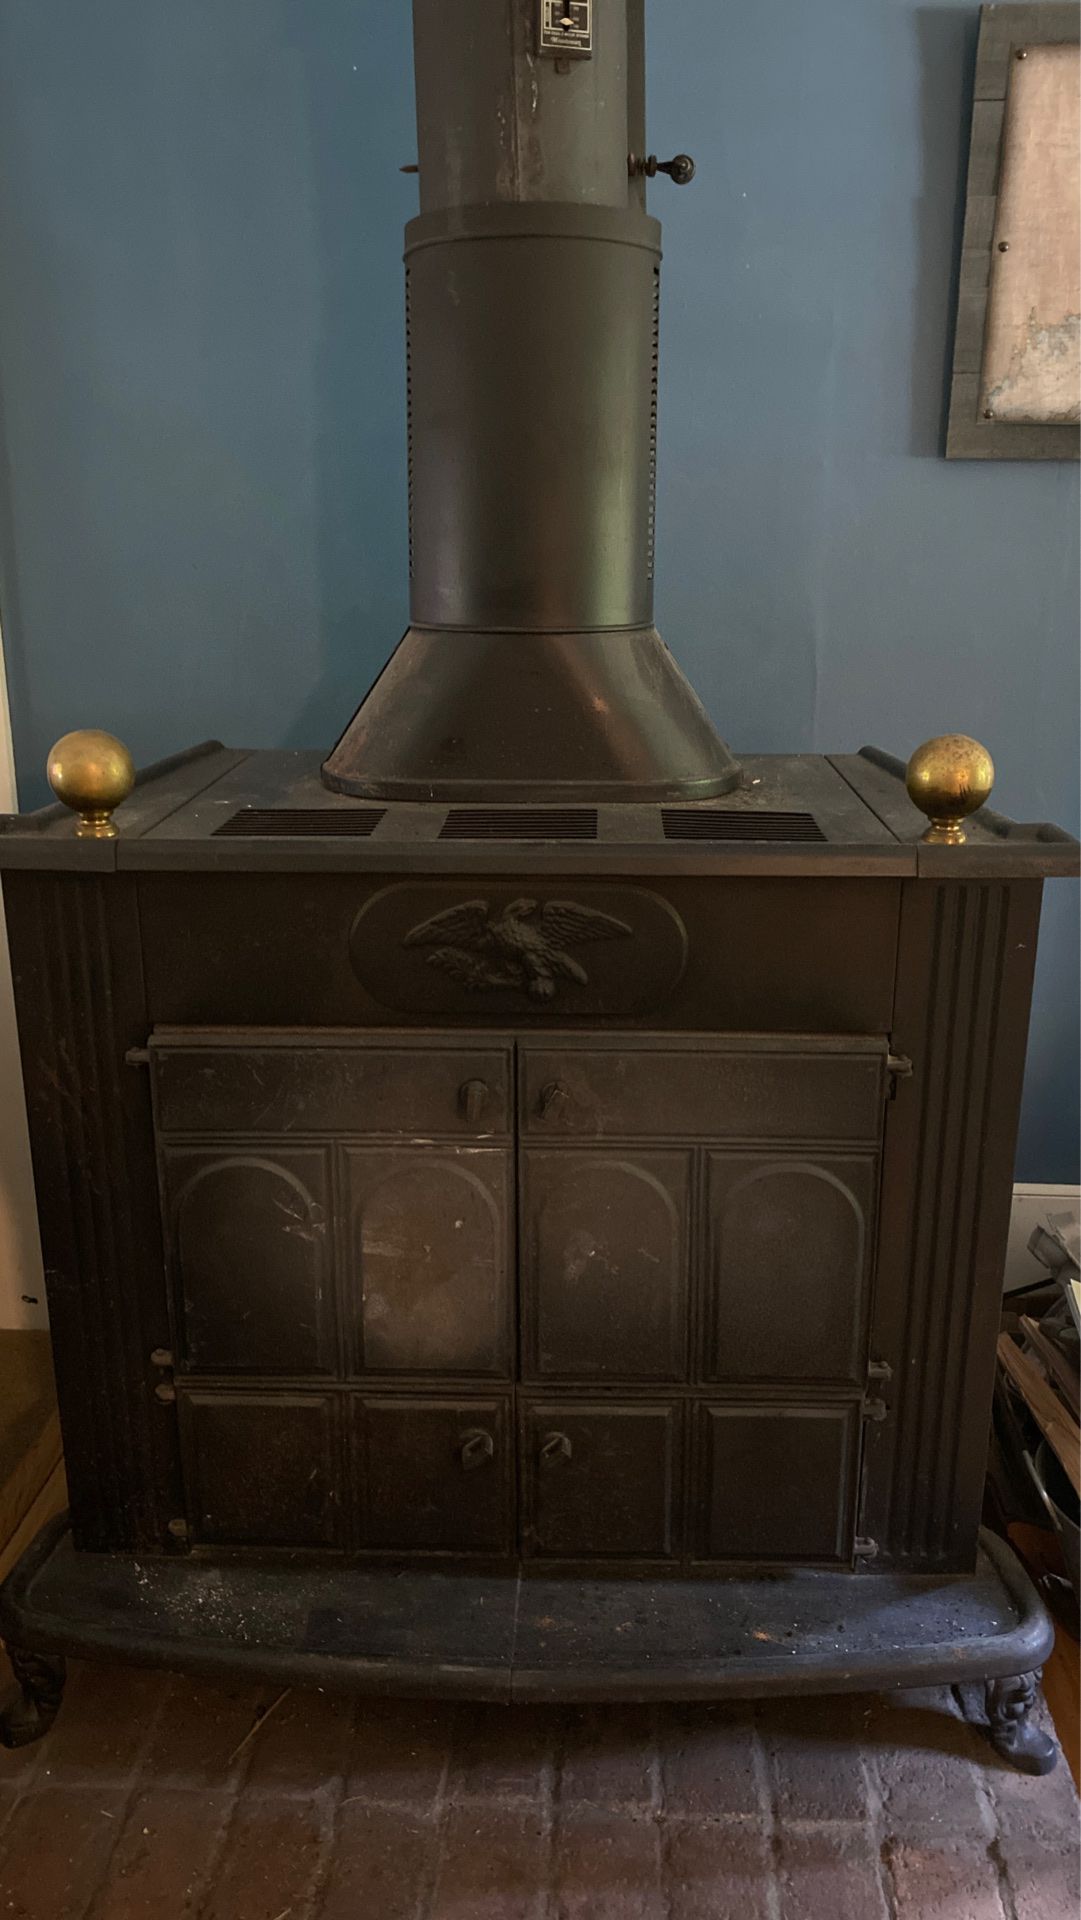 Beautiful older style large wood stove w/blower!